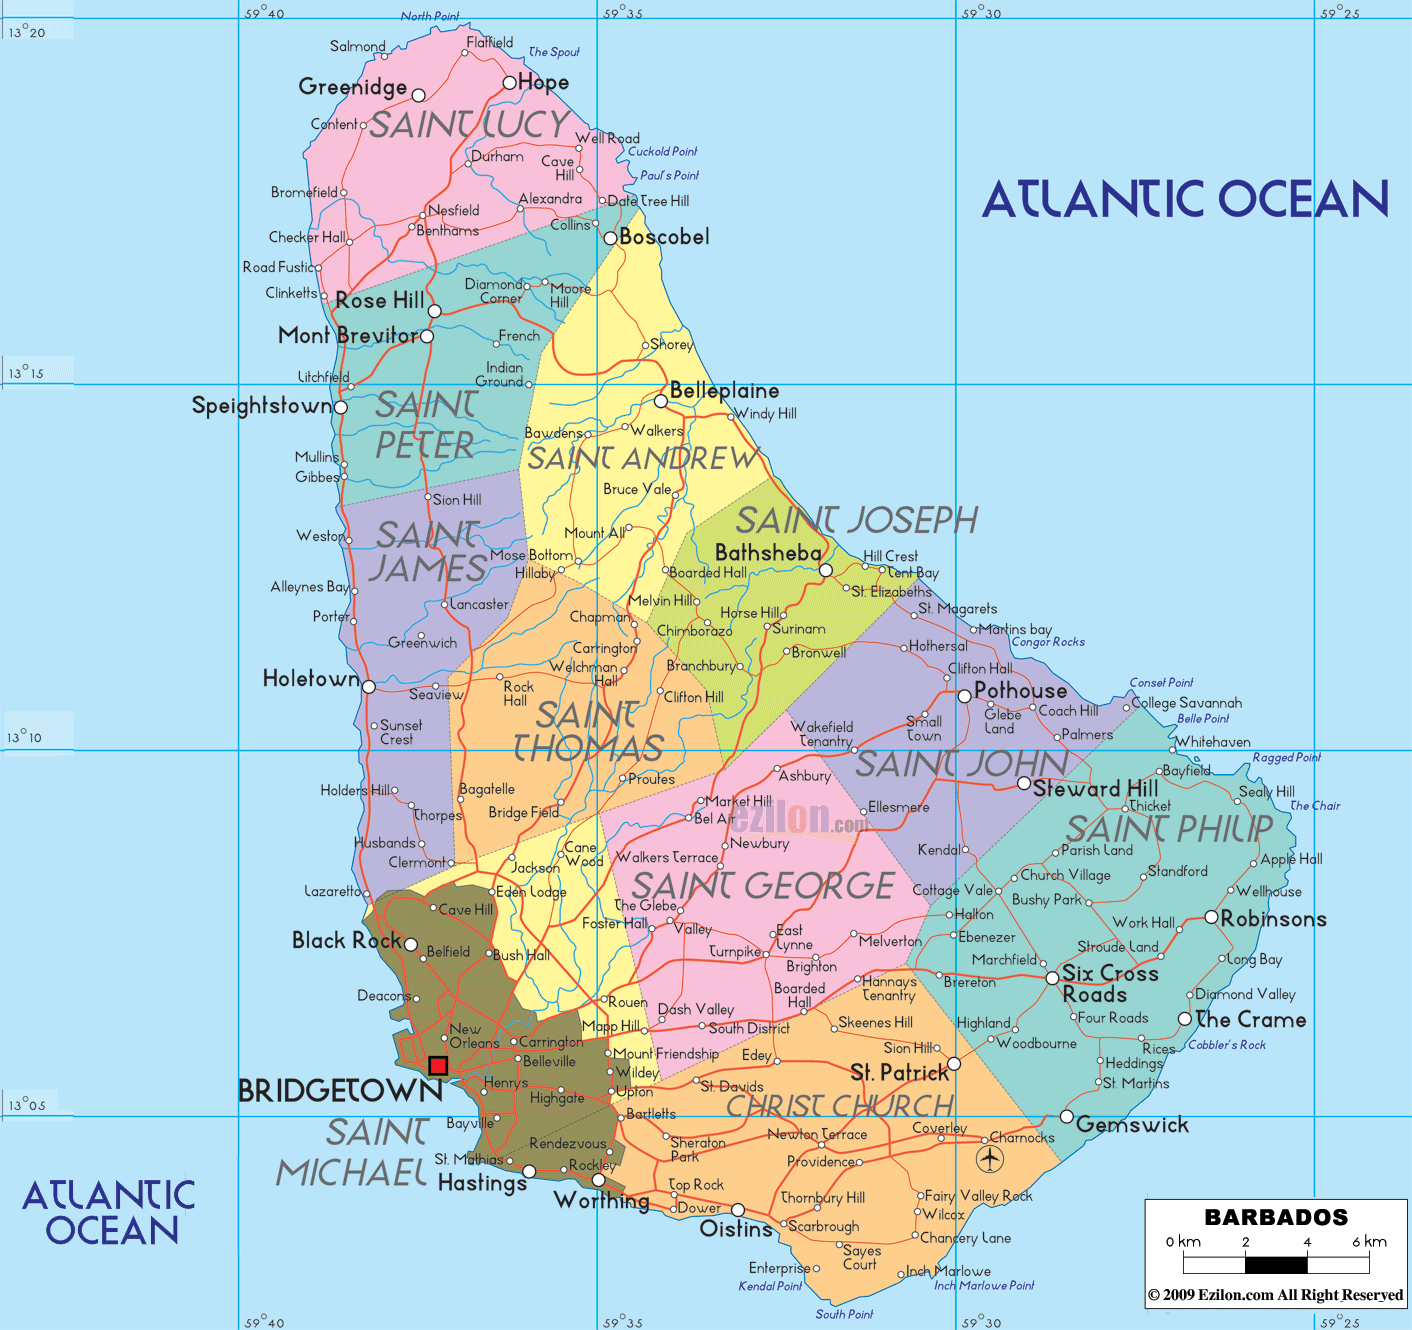 Barbados On Map In Atlantic Ocean 